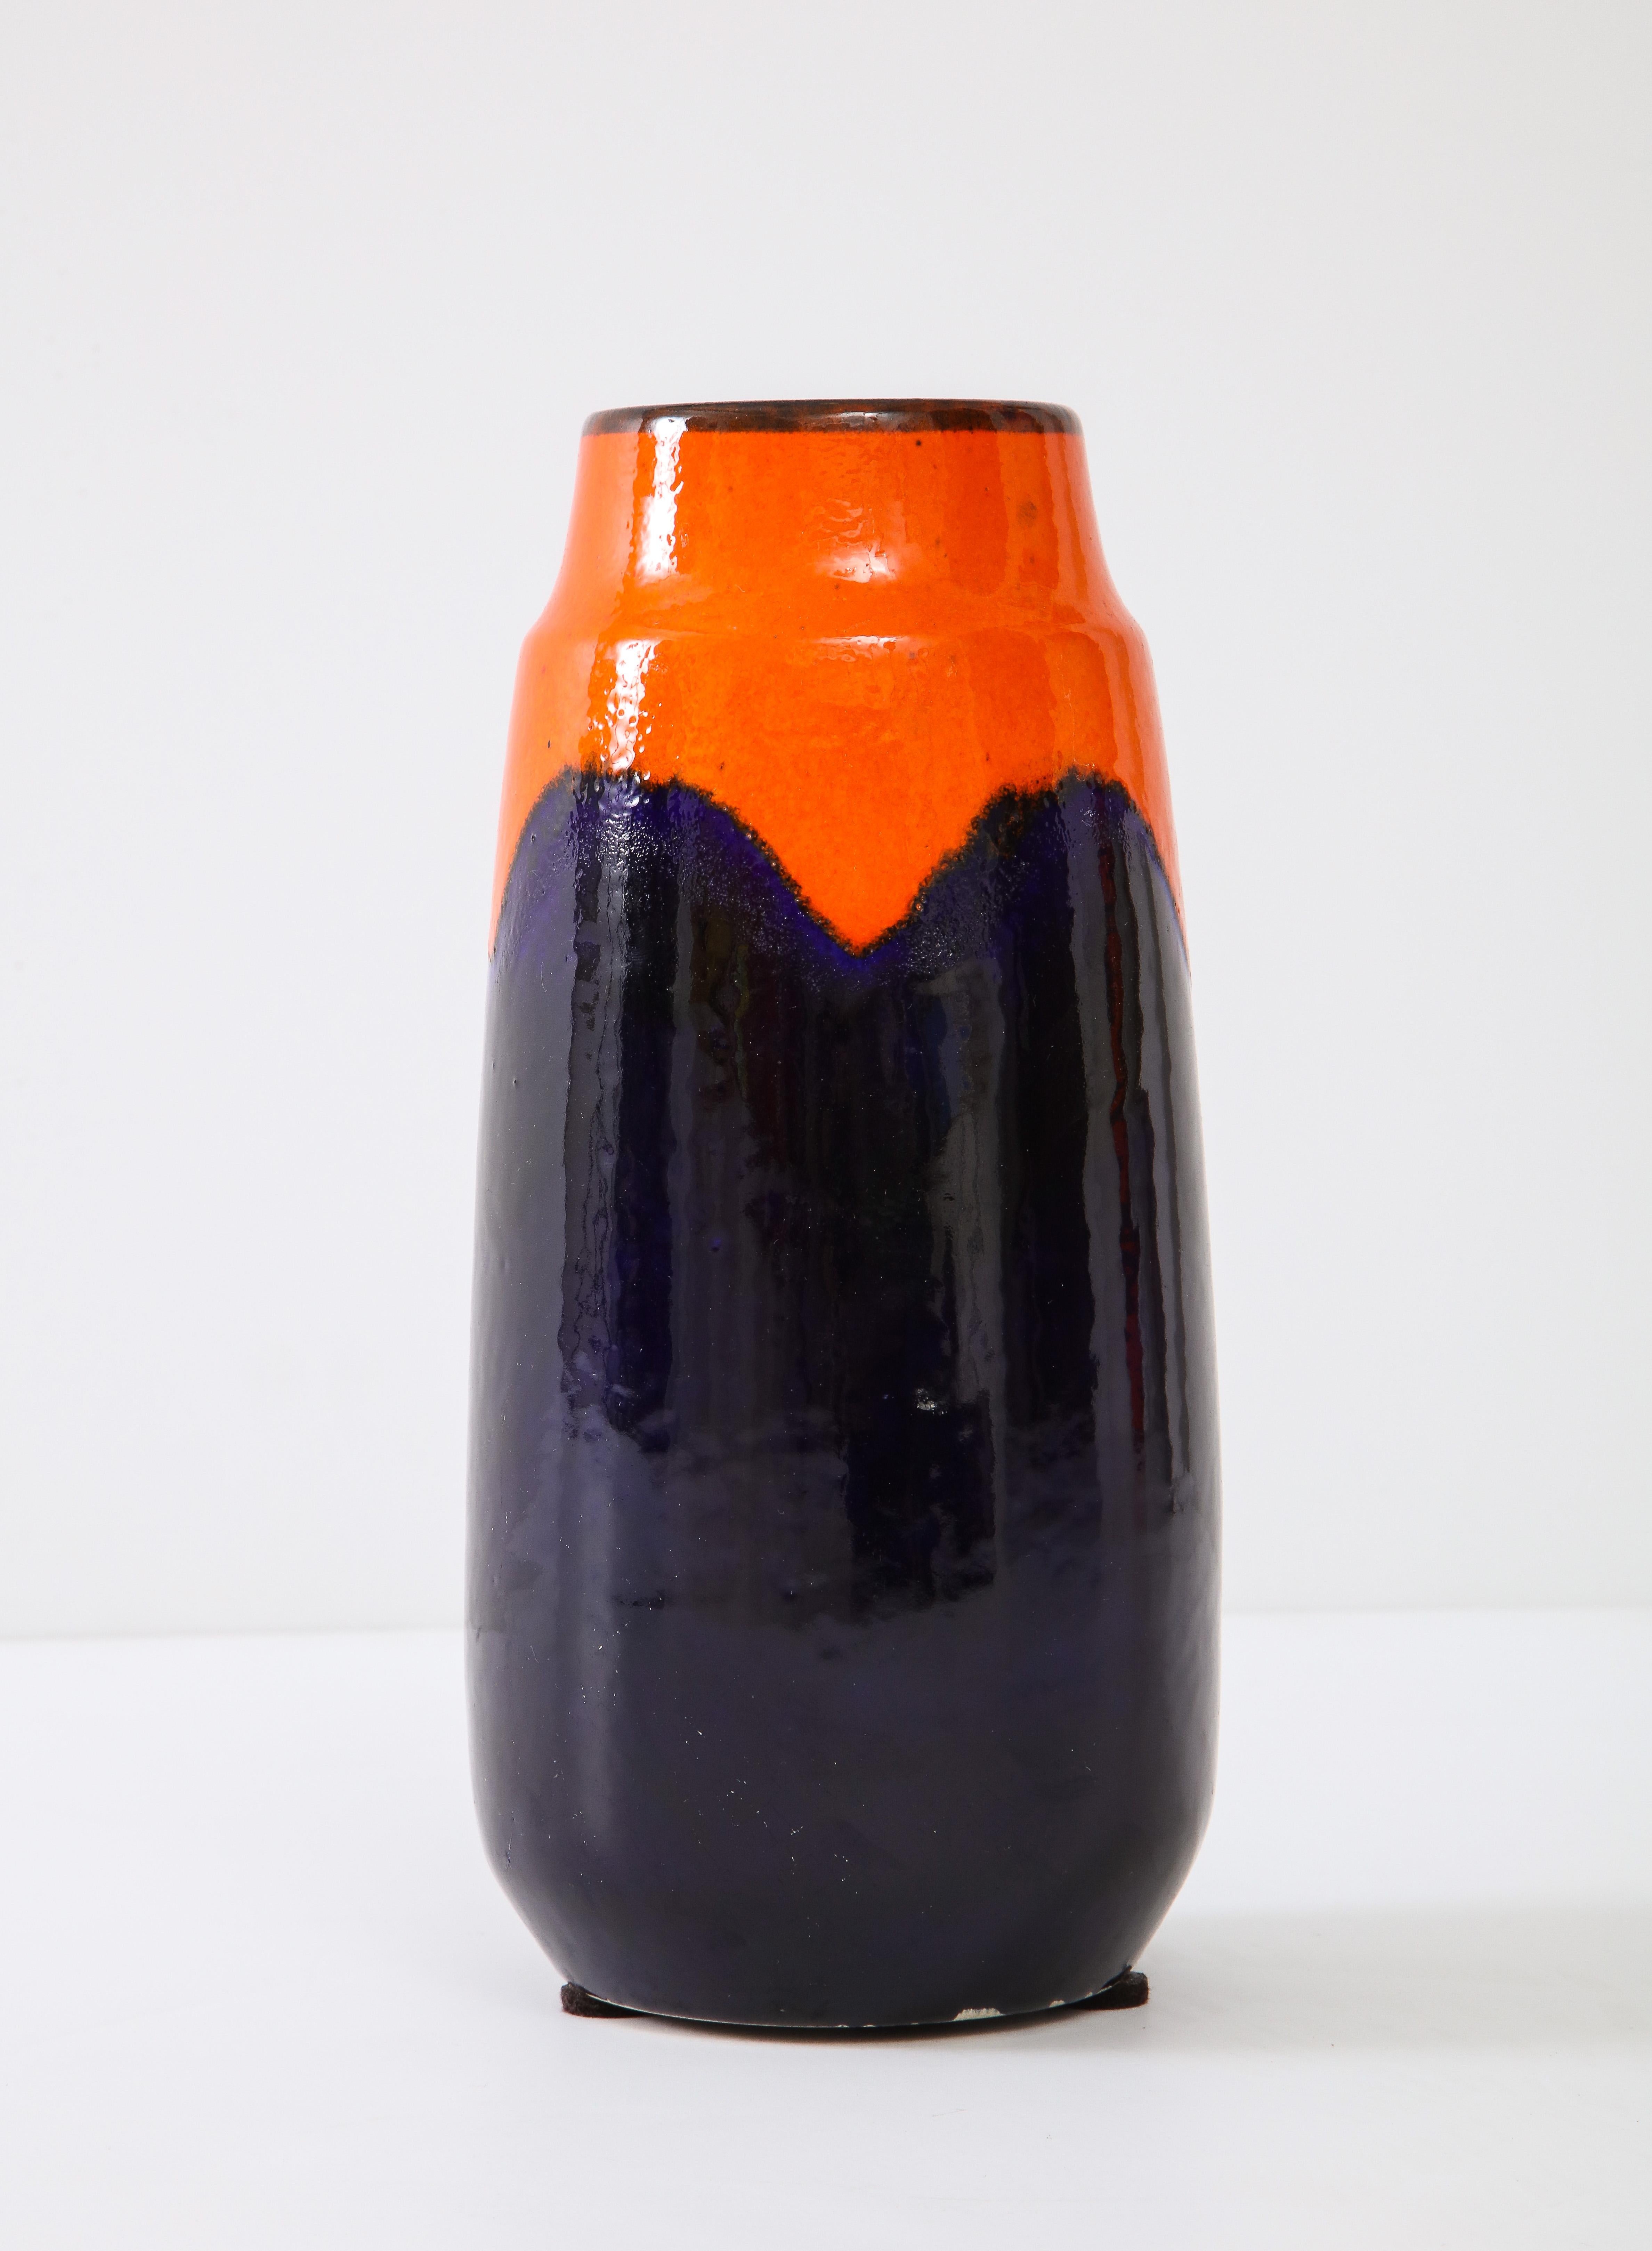 Scheurich blue and orange ceramic glazed vase, Germany, circa 1970.
   